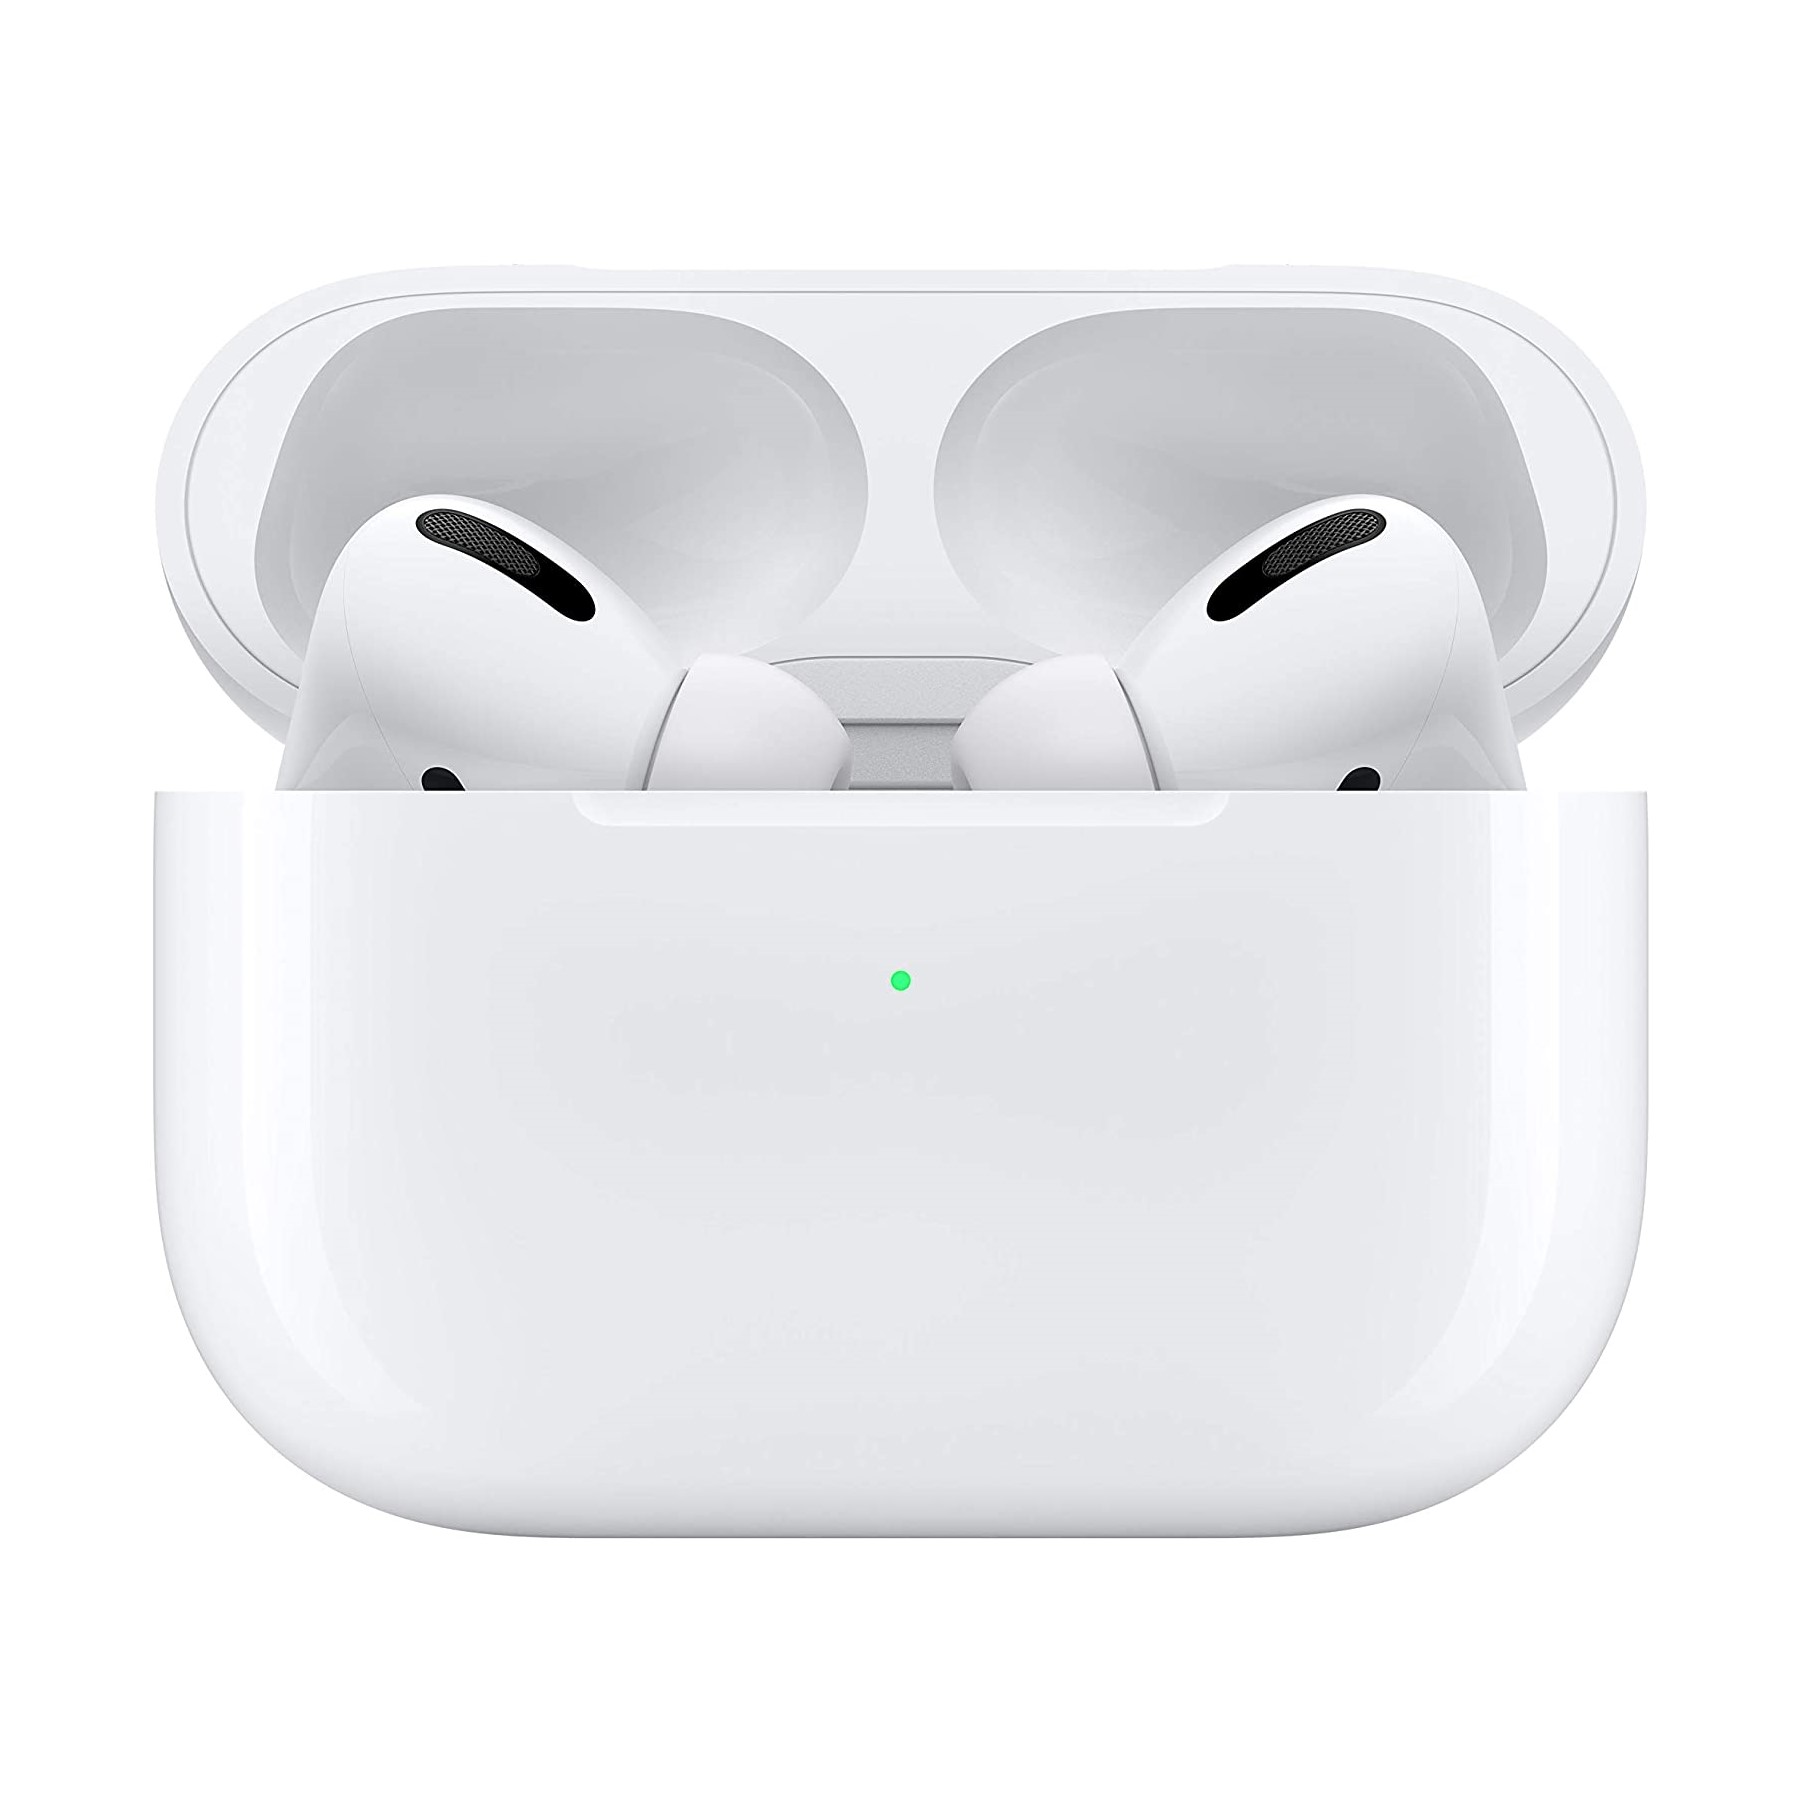 Apple AirPods Pro MLWK3J/Aアップル純正ワイヤレスイヤホン エアポッズプロ Bluetooth対応ワイヤレスイヤホン 国内正規品 新品未開封